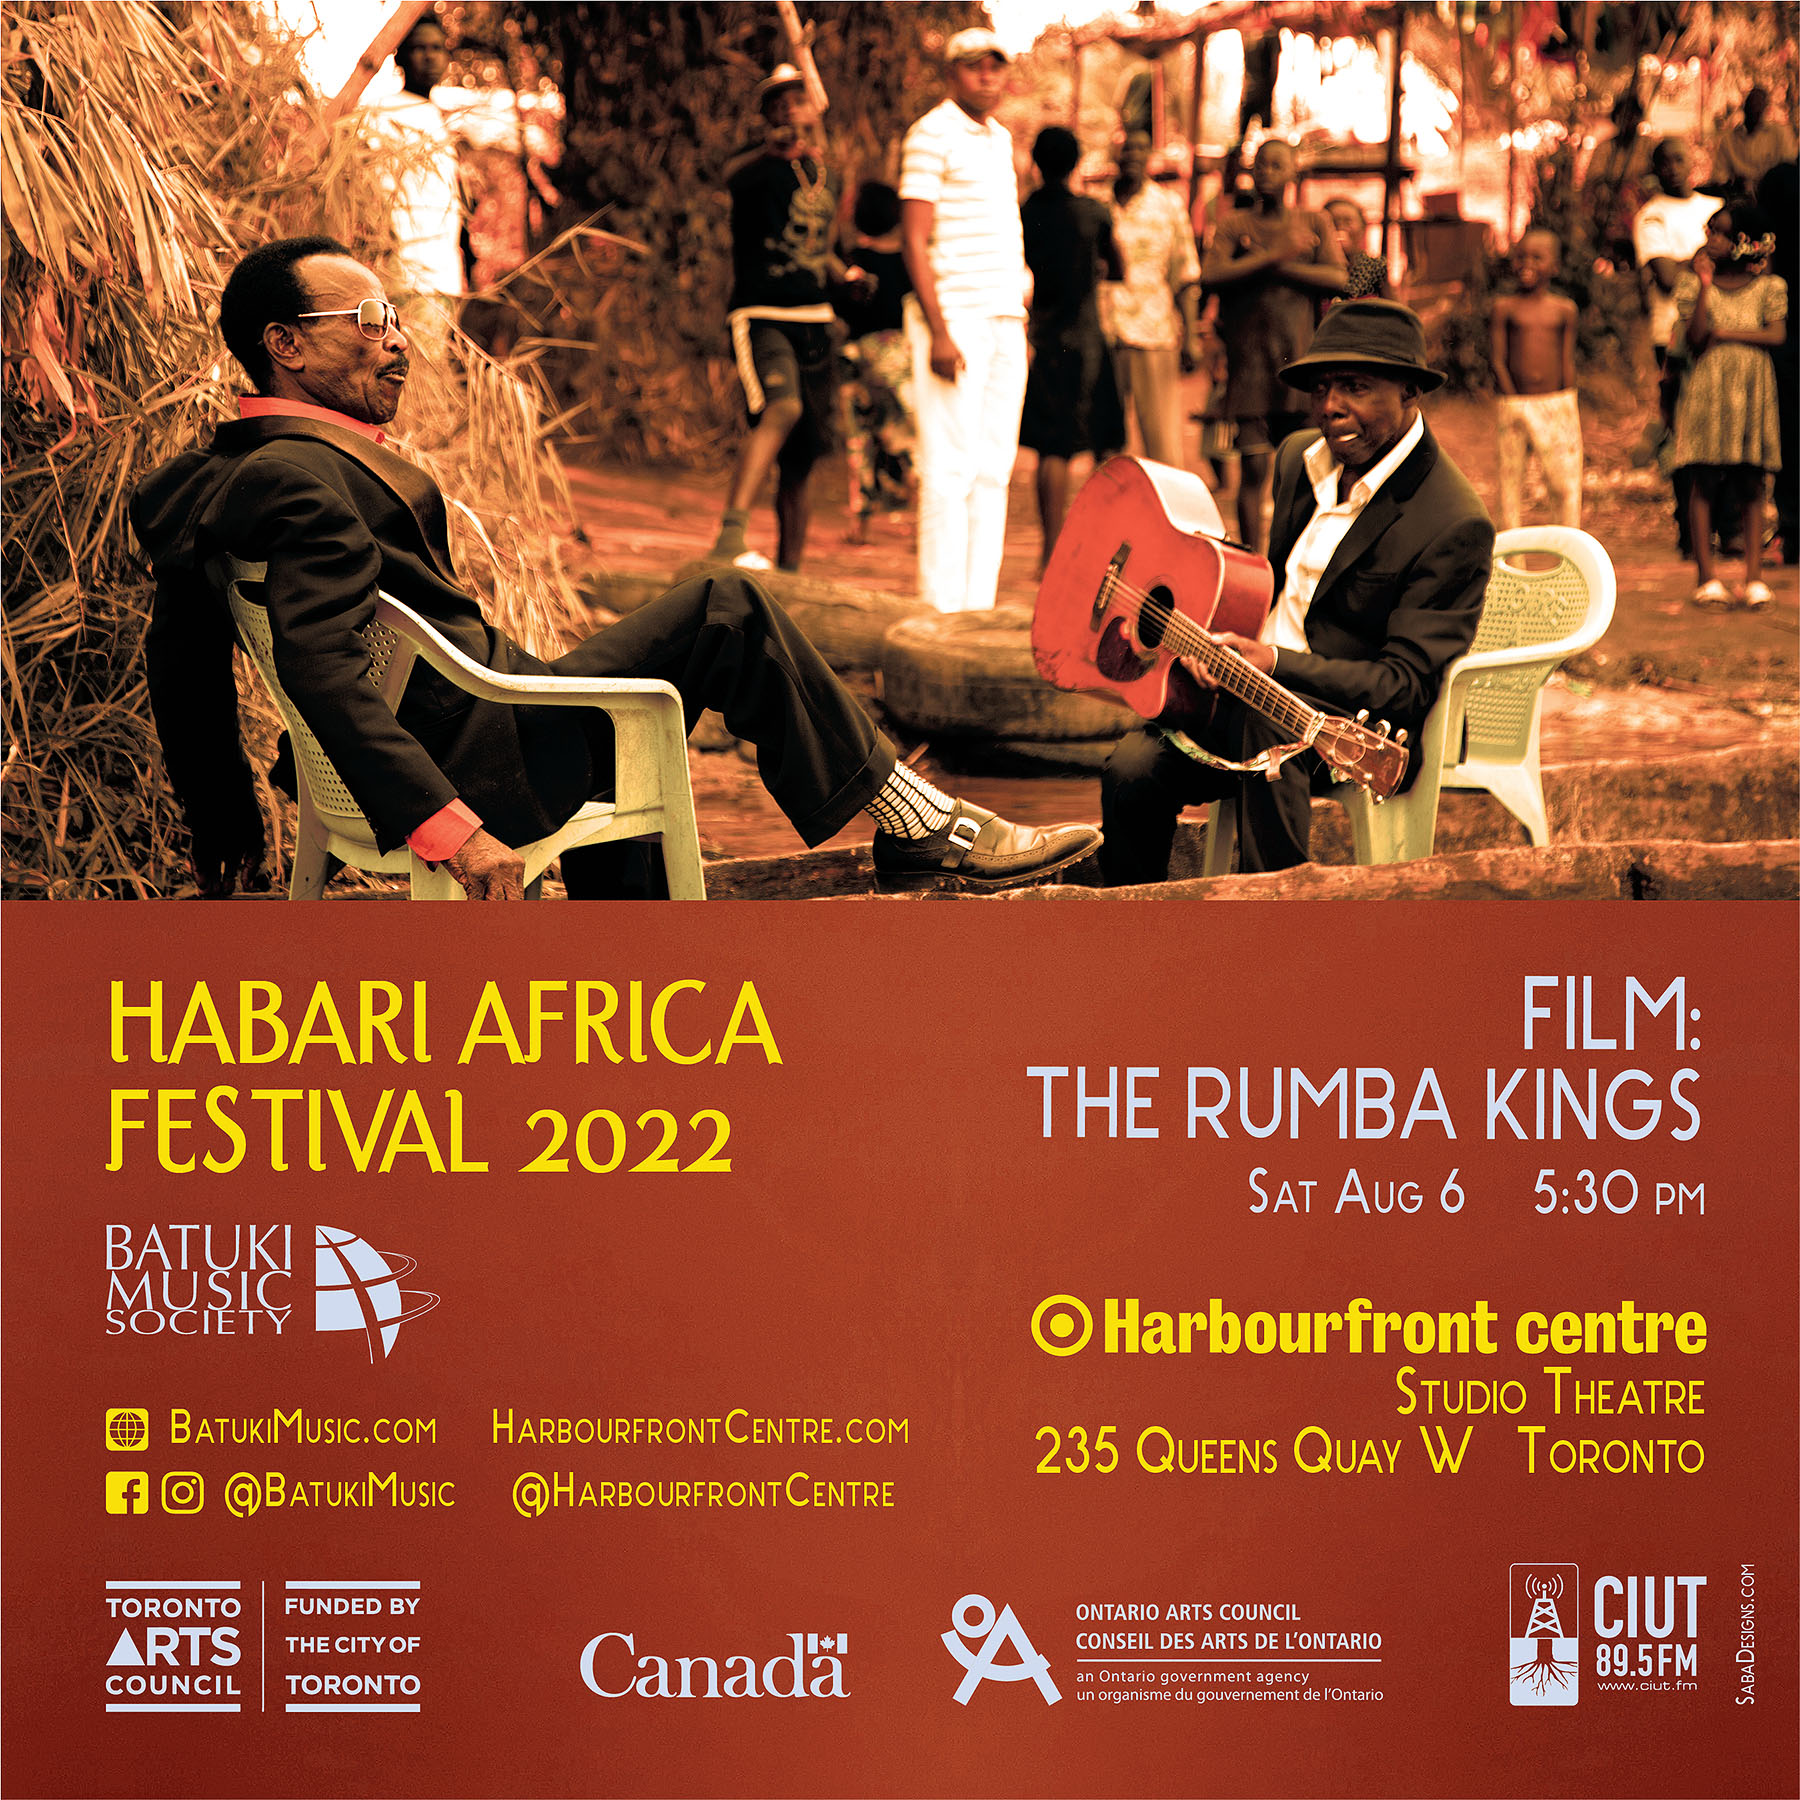 Habari Africa Live Festival 2022 by Batuki Music Society rumba kings